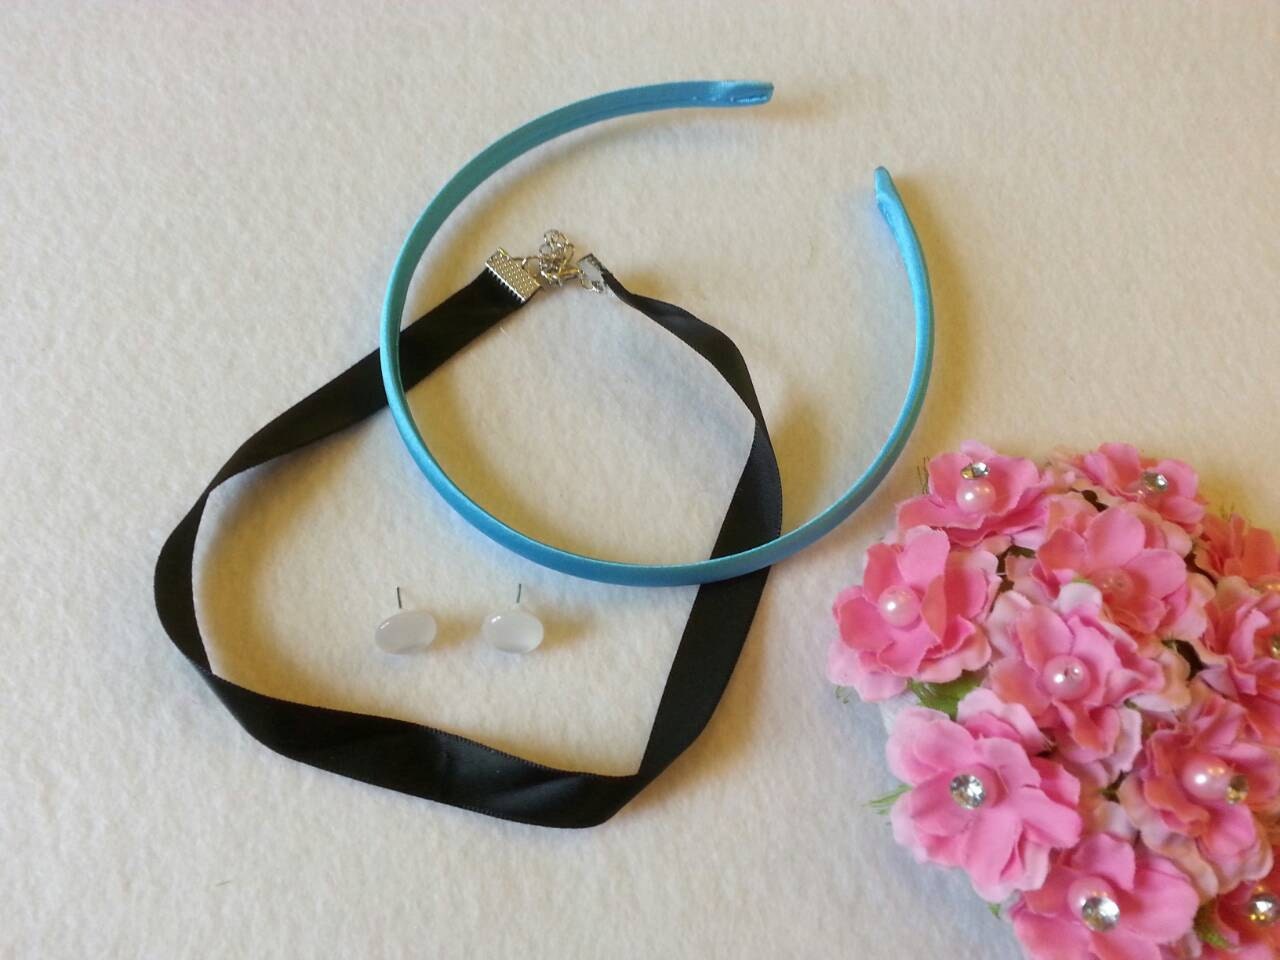 New Princess Accessories Dangling Earrings Free Gift Bag  eBay